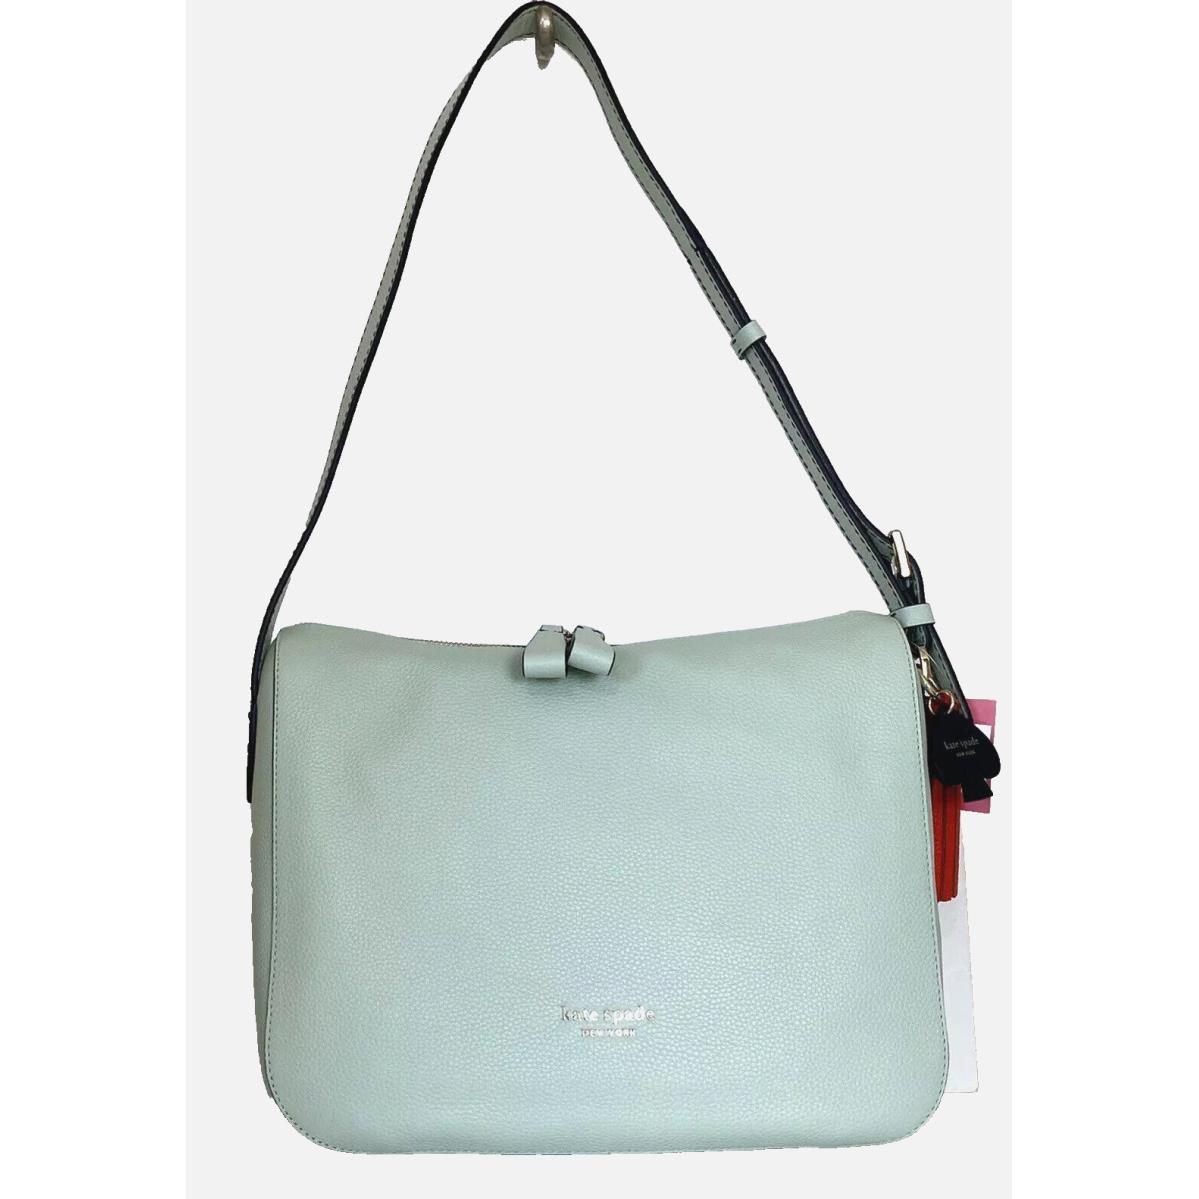 New Kate Spade Anyday Medium Shoulder Bag Pebble Leather Crystal Blue / Dust Bag